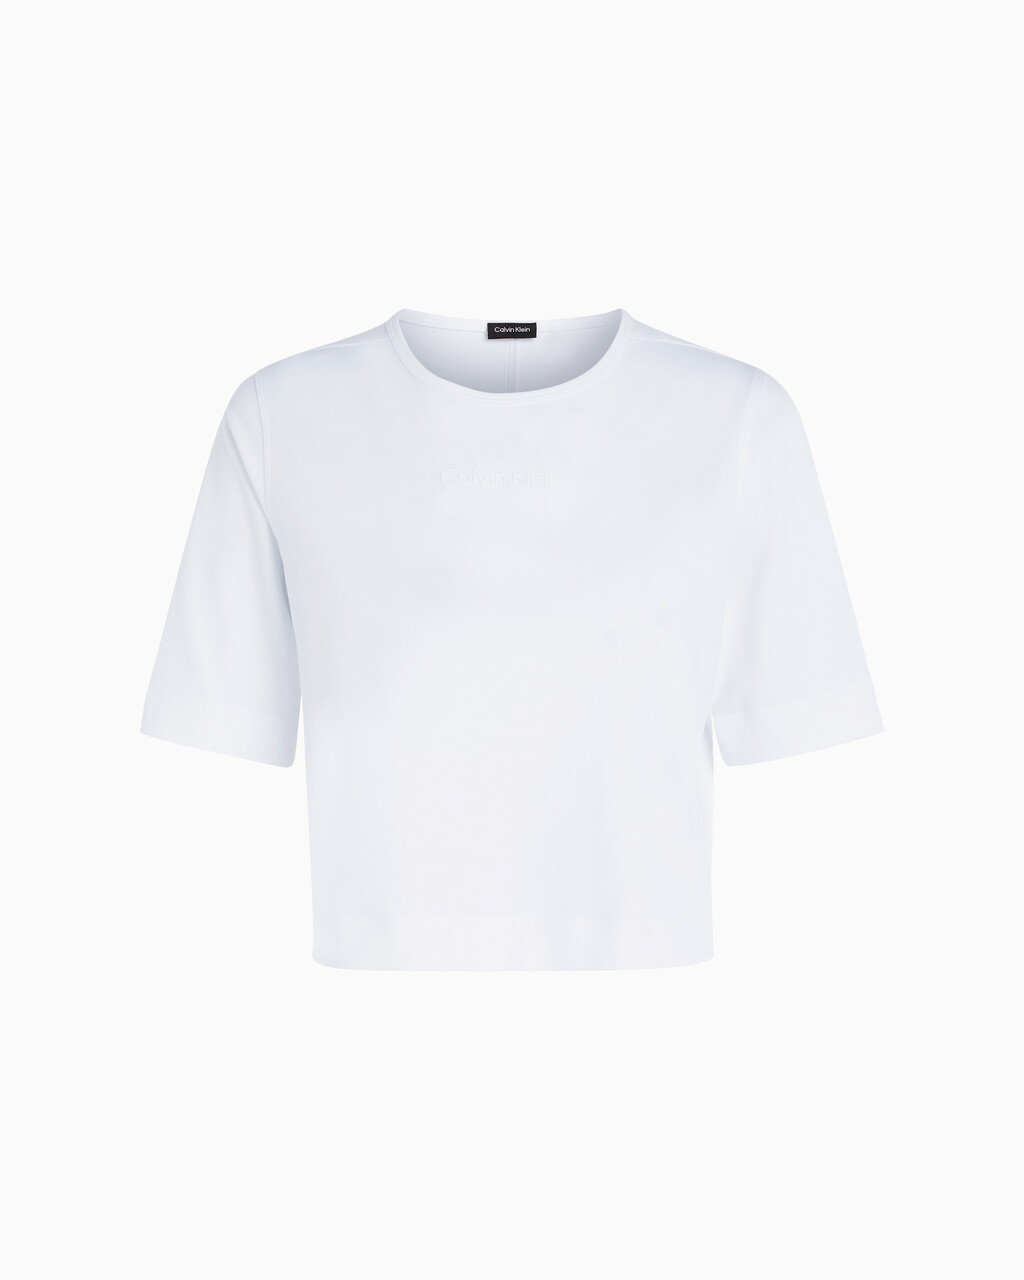 Gym T-Shirt, BRIGHT WHITE, hi-res